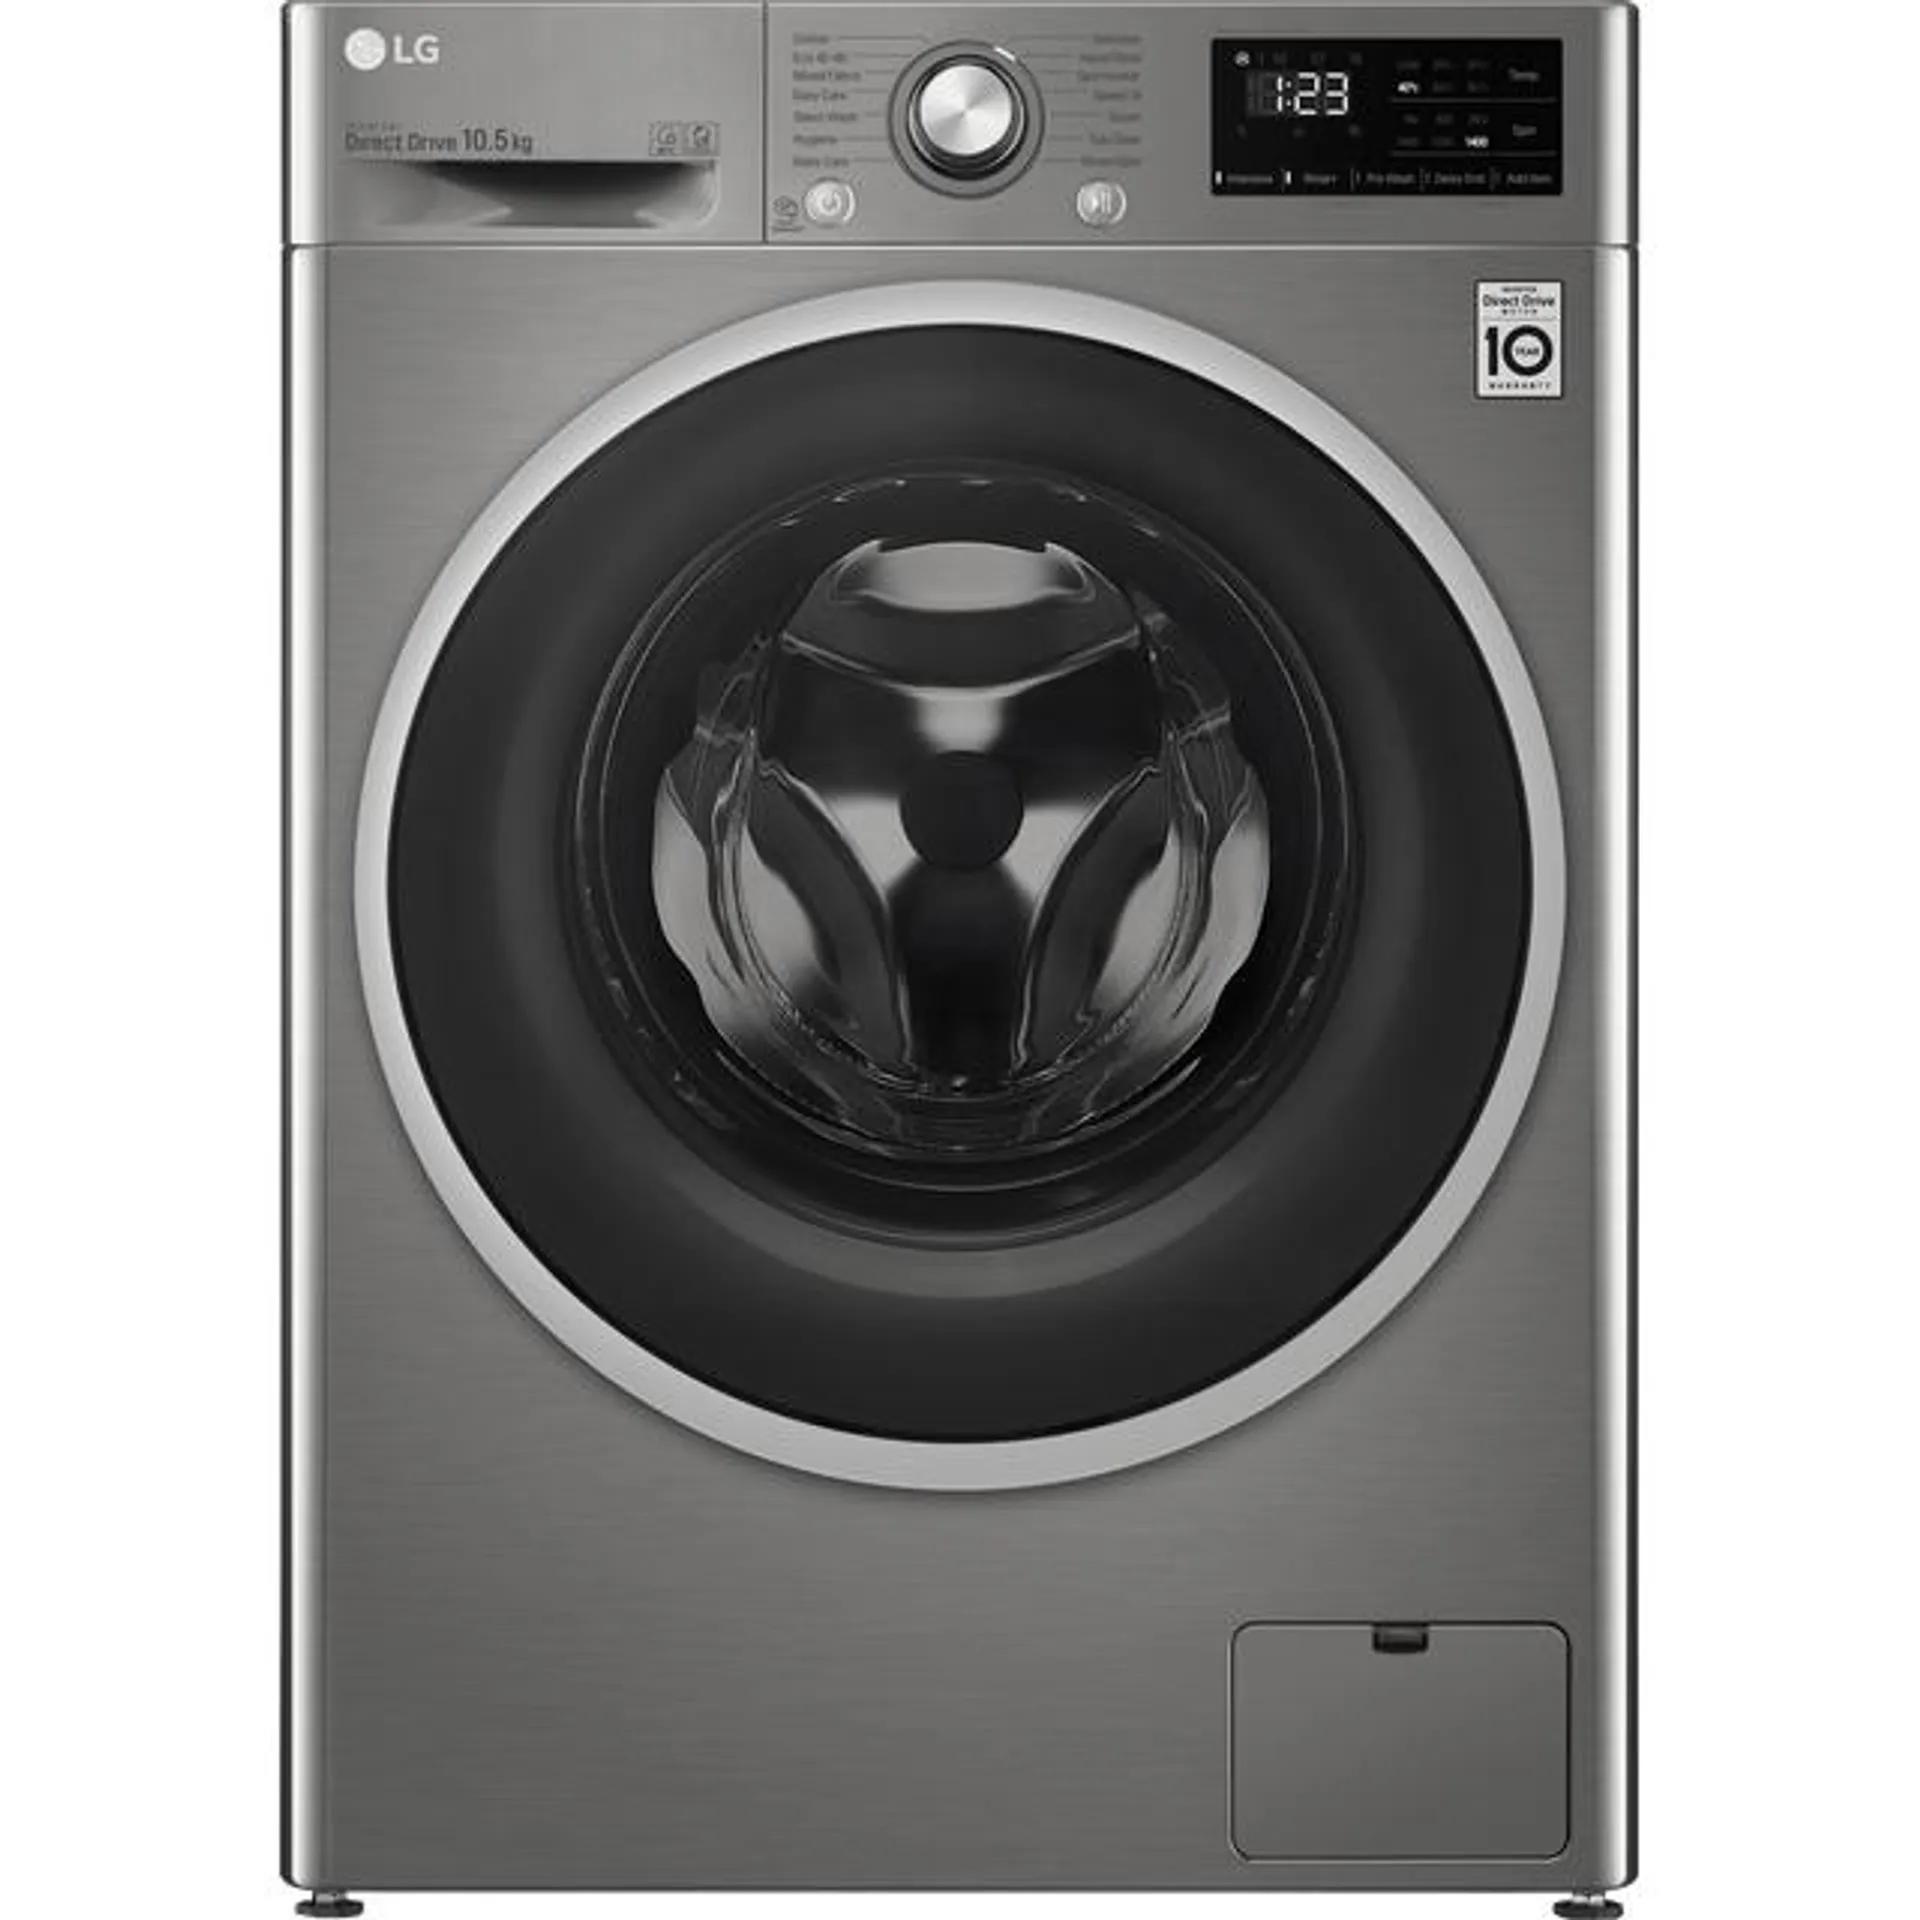 LG V3 FAV310SNE 10.5kg Washing Machine with 1400 rpm - Graphite - B Rated